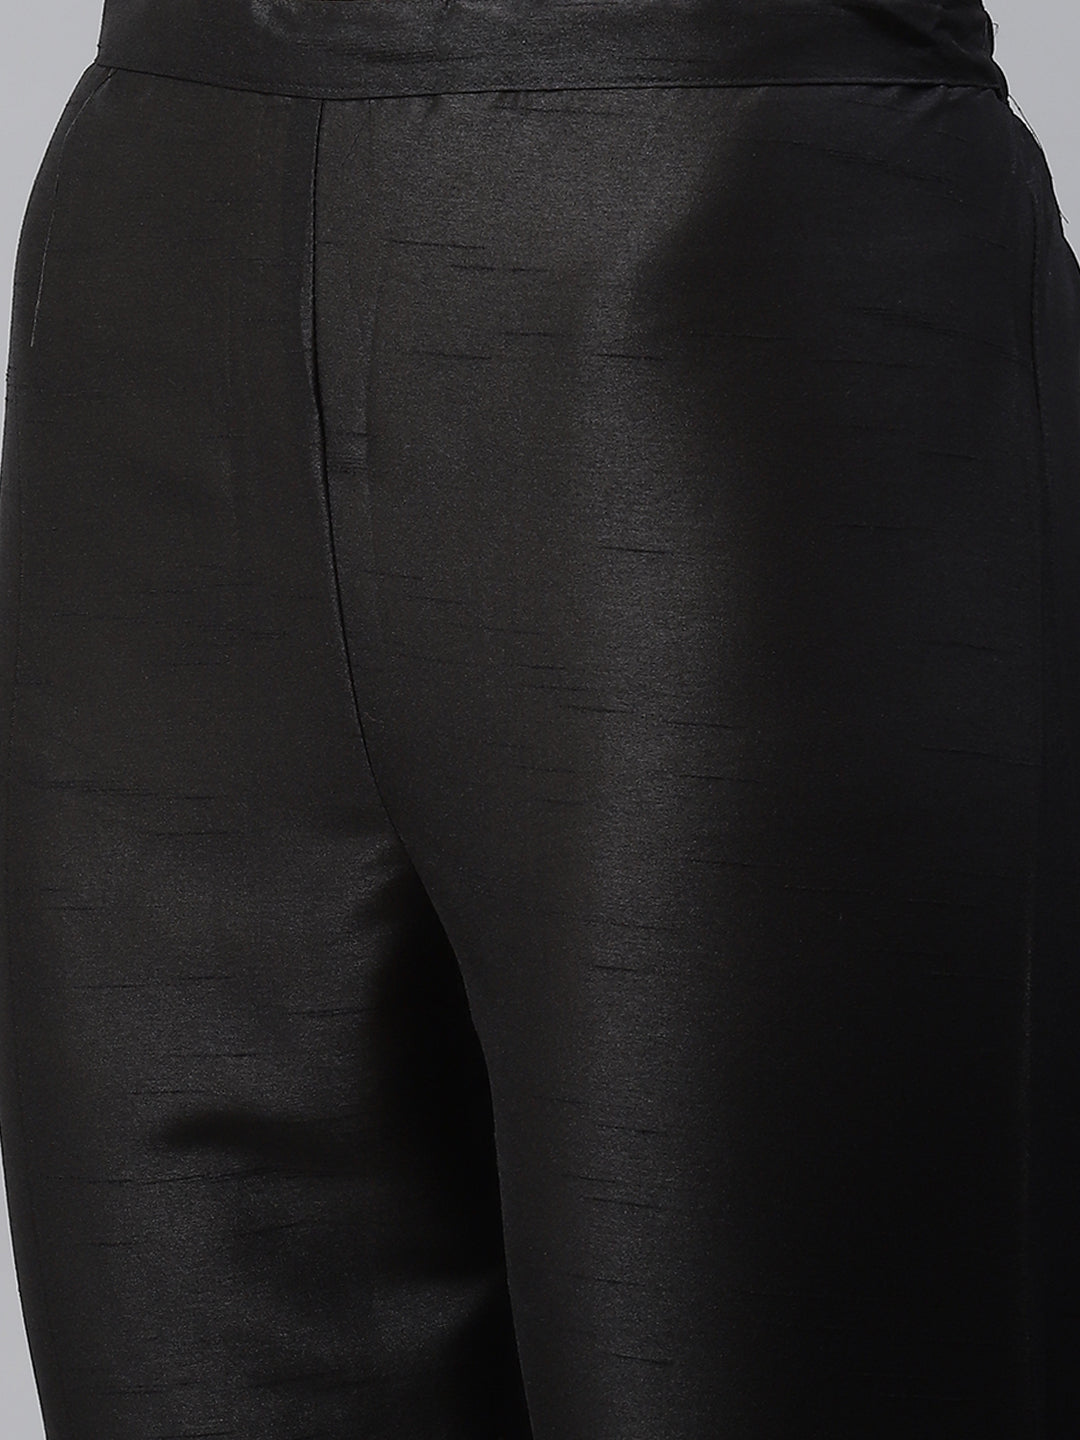 Women's Black Foil Printed A-Line Kurta And Pant by Ziyaa- (2pcs set)